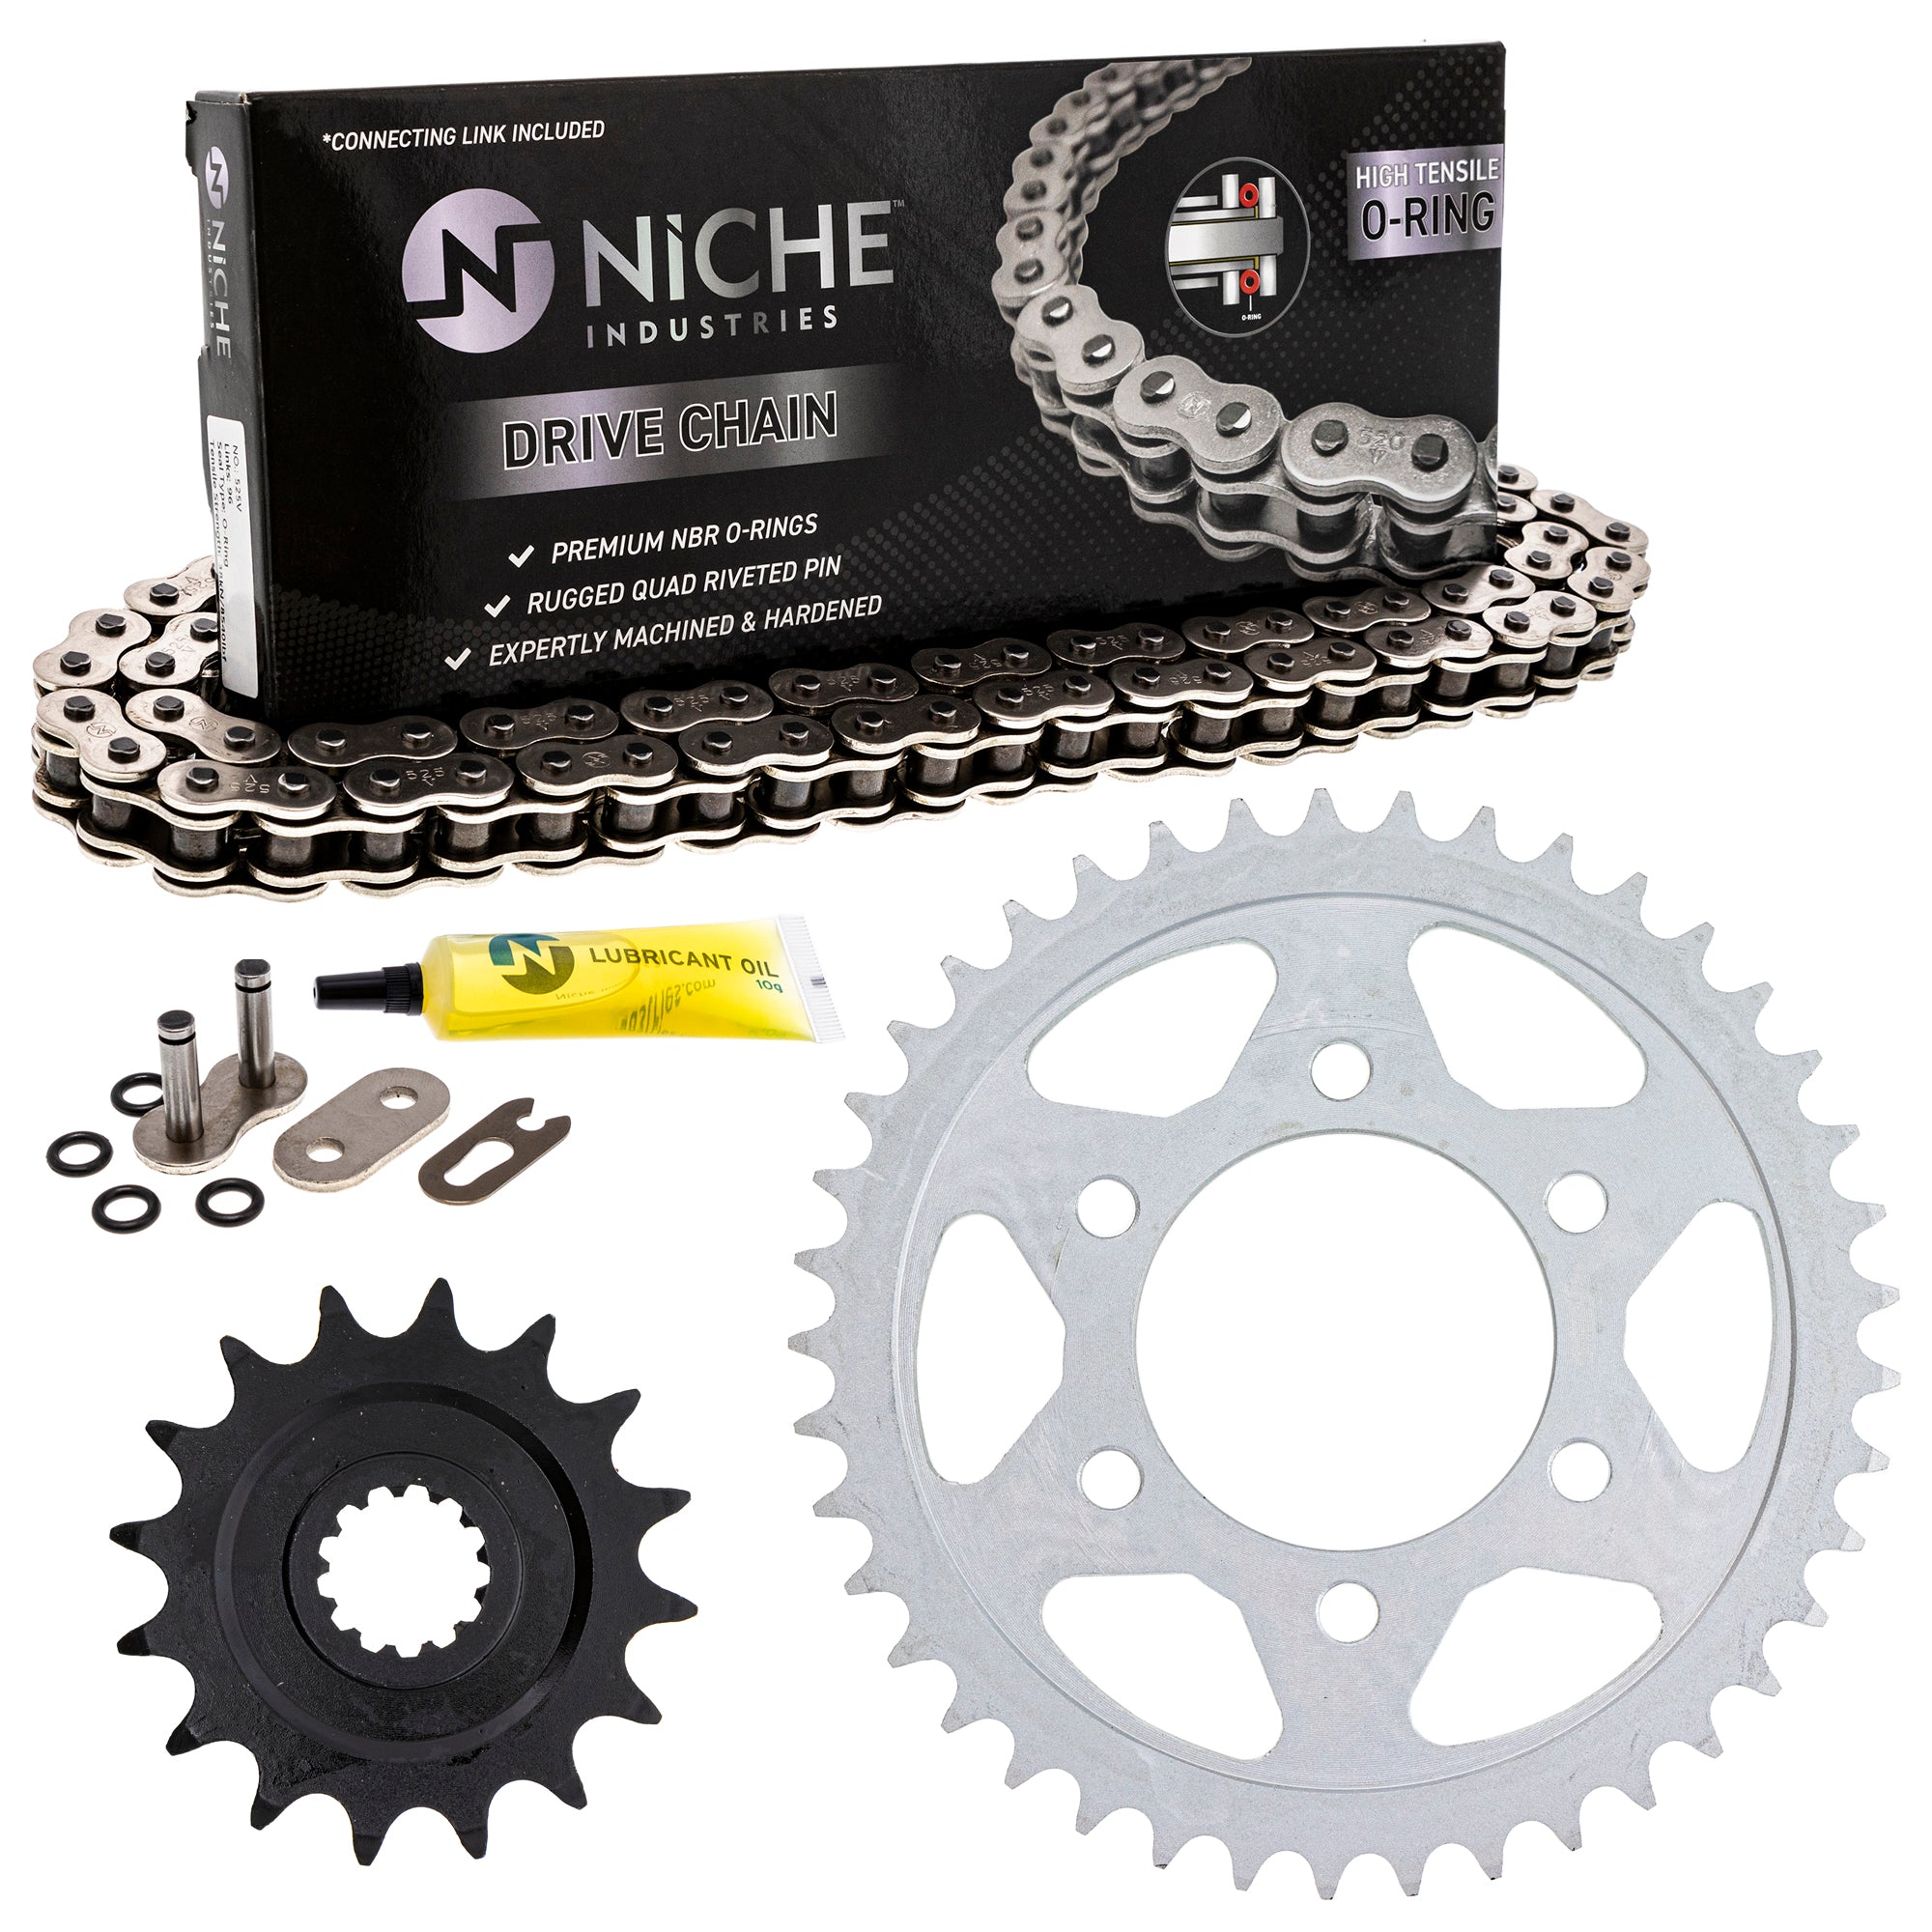 Drive Sprockets & Chain Kit for zOTHER Ninja 519-KCS0808K-K001 NICHE MK1004336